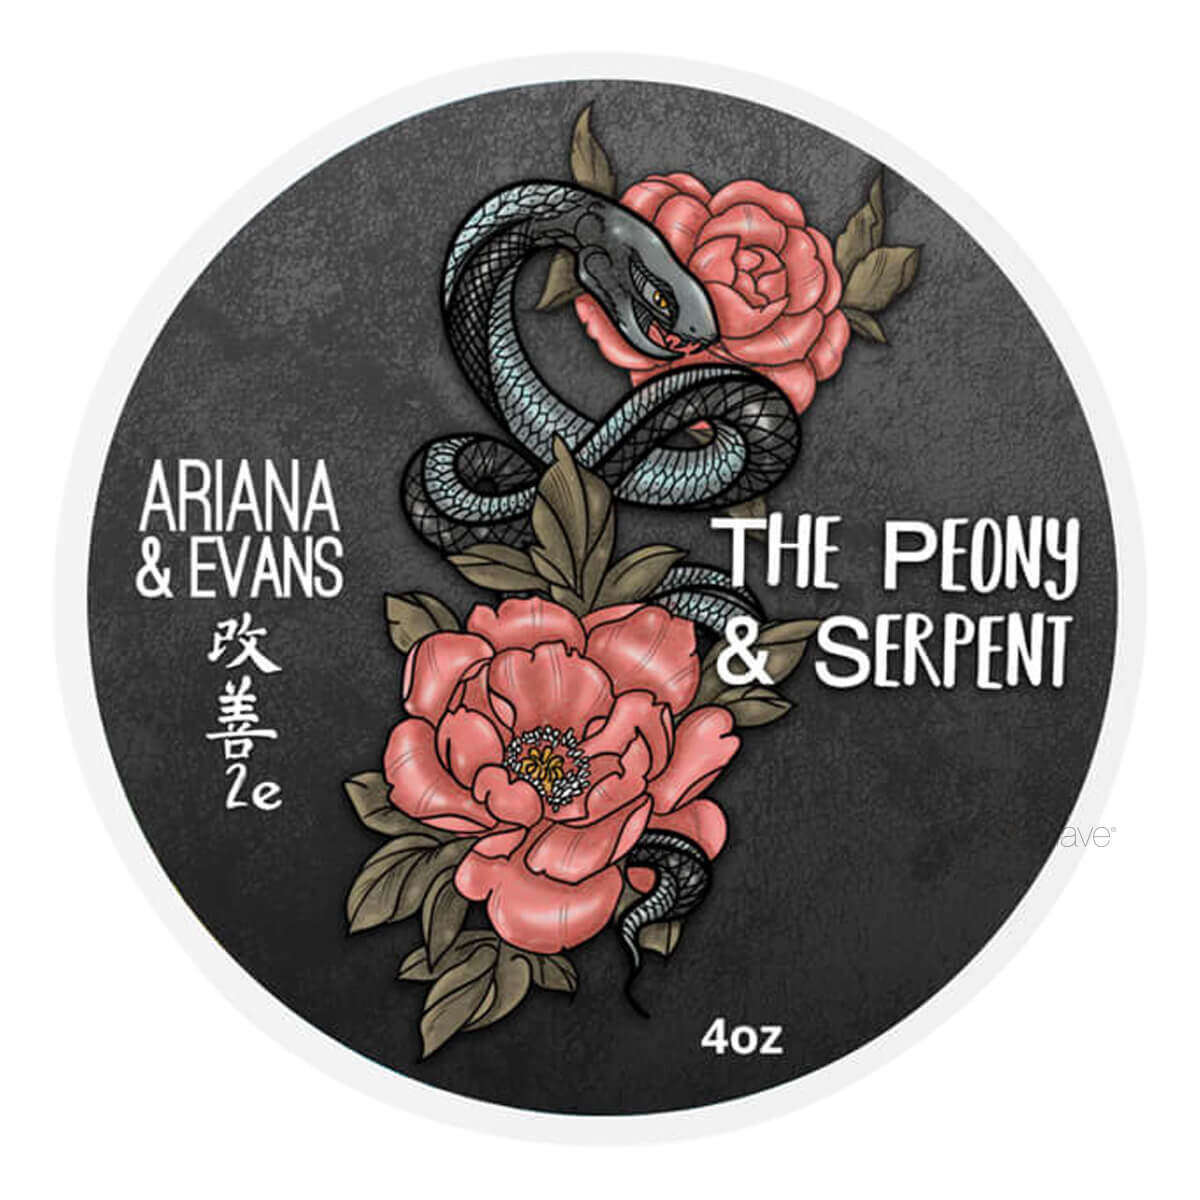 Ariana & Evans Barbersæbe, The Serpent & Peony, 118 ml.